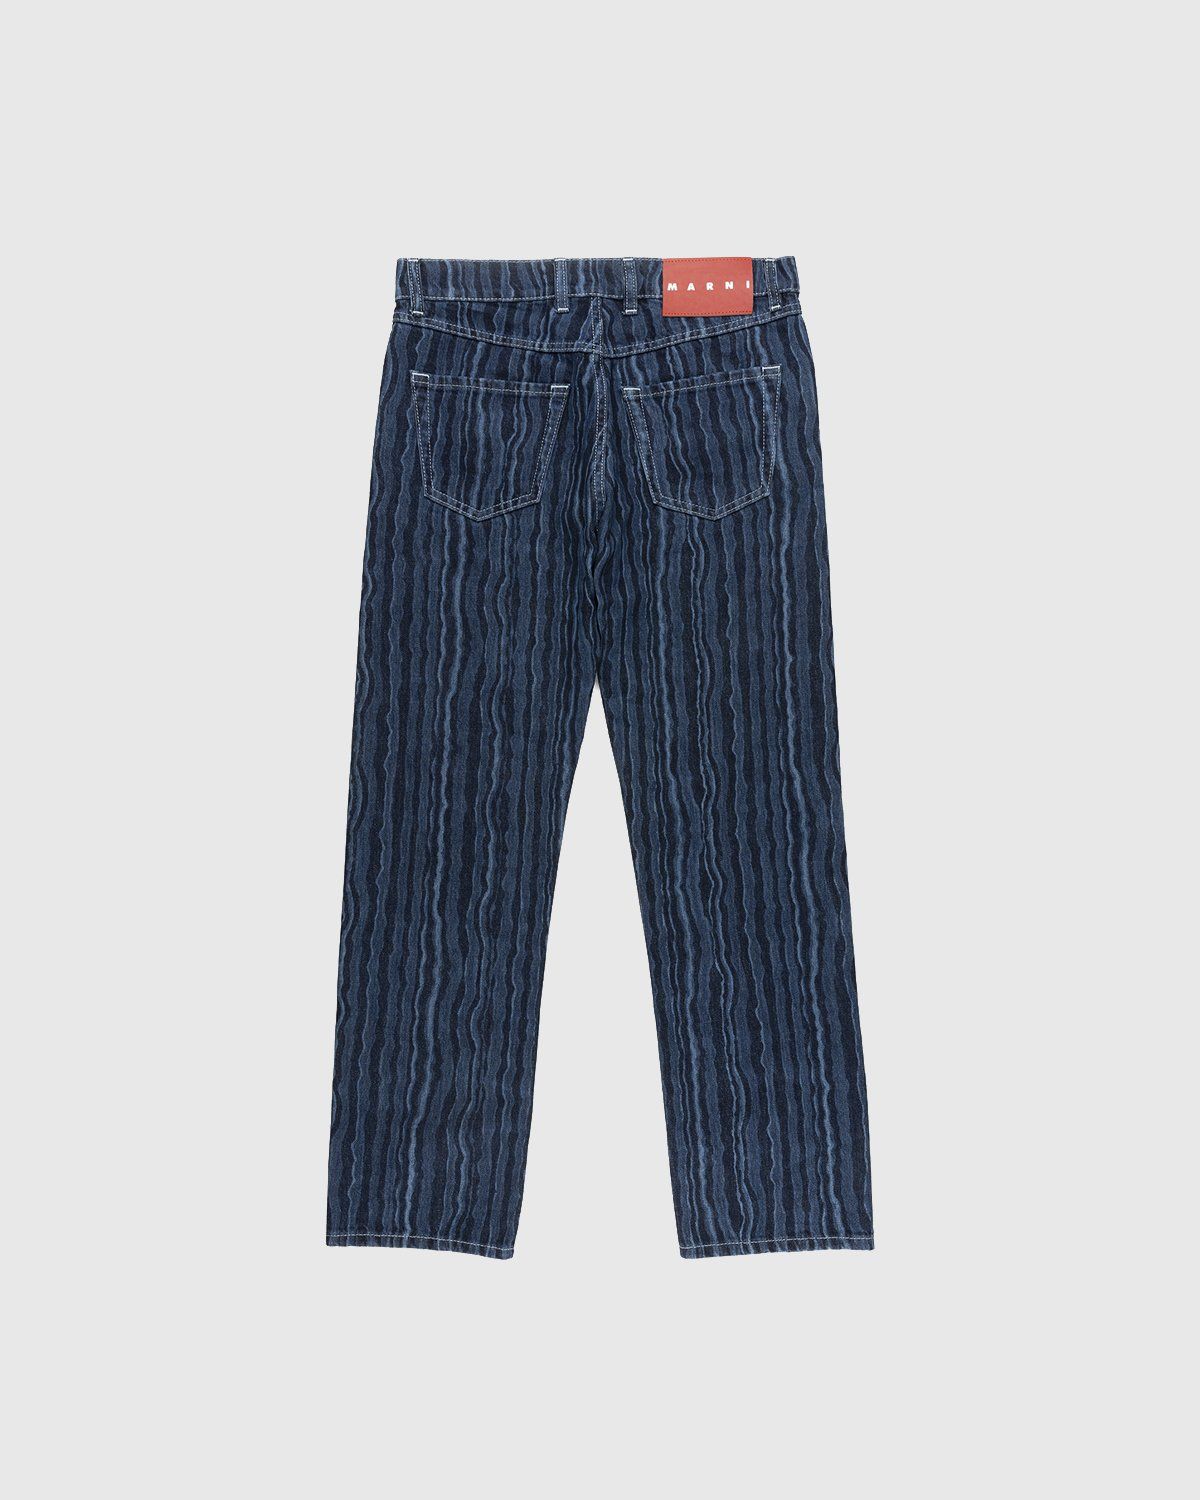 Marni – Abstract Print Wide Leg Jeans Blue - Pants - Blue - Image 2